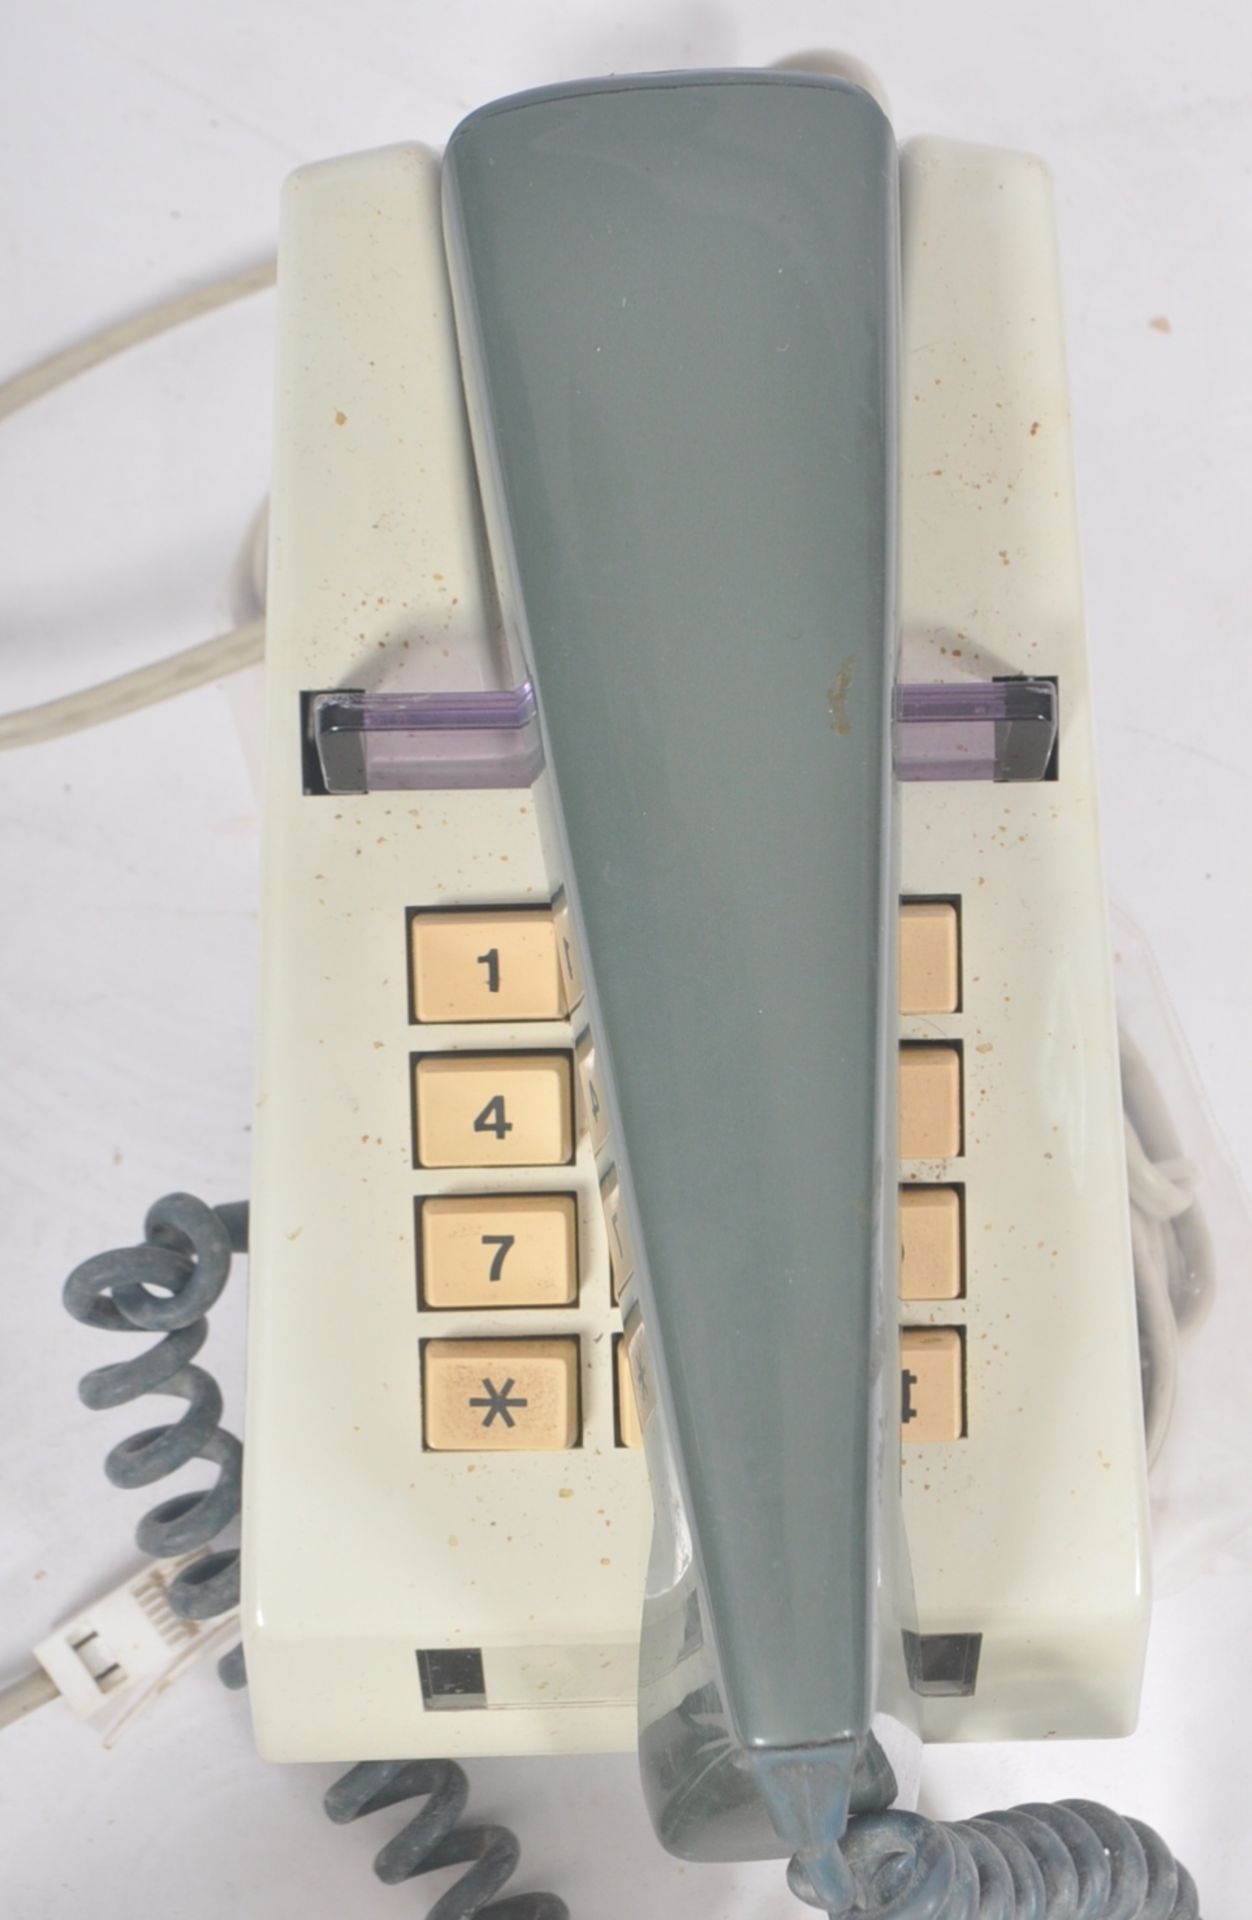 COLLECTION OF NINE VINTAGE 1970S GPO TRIMBONE TELEPHONES - Image 4 of 9